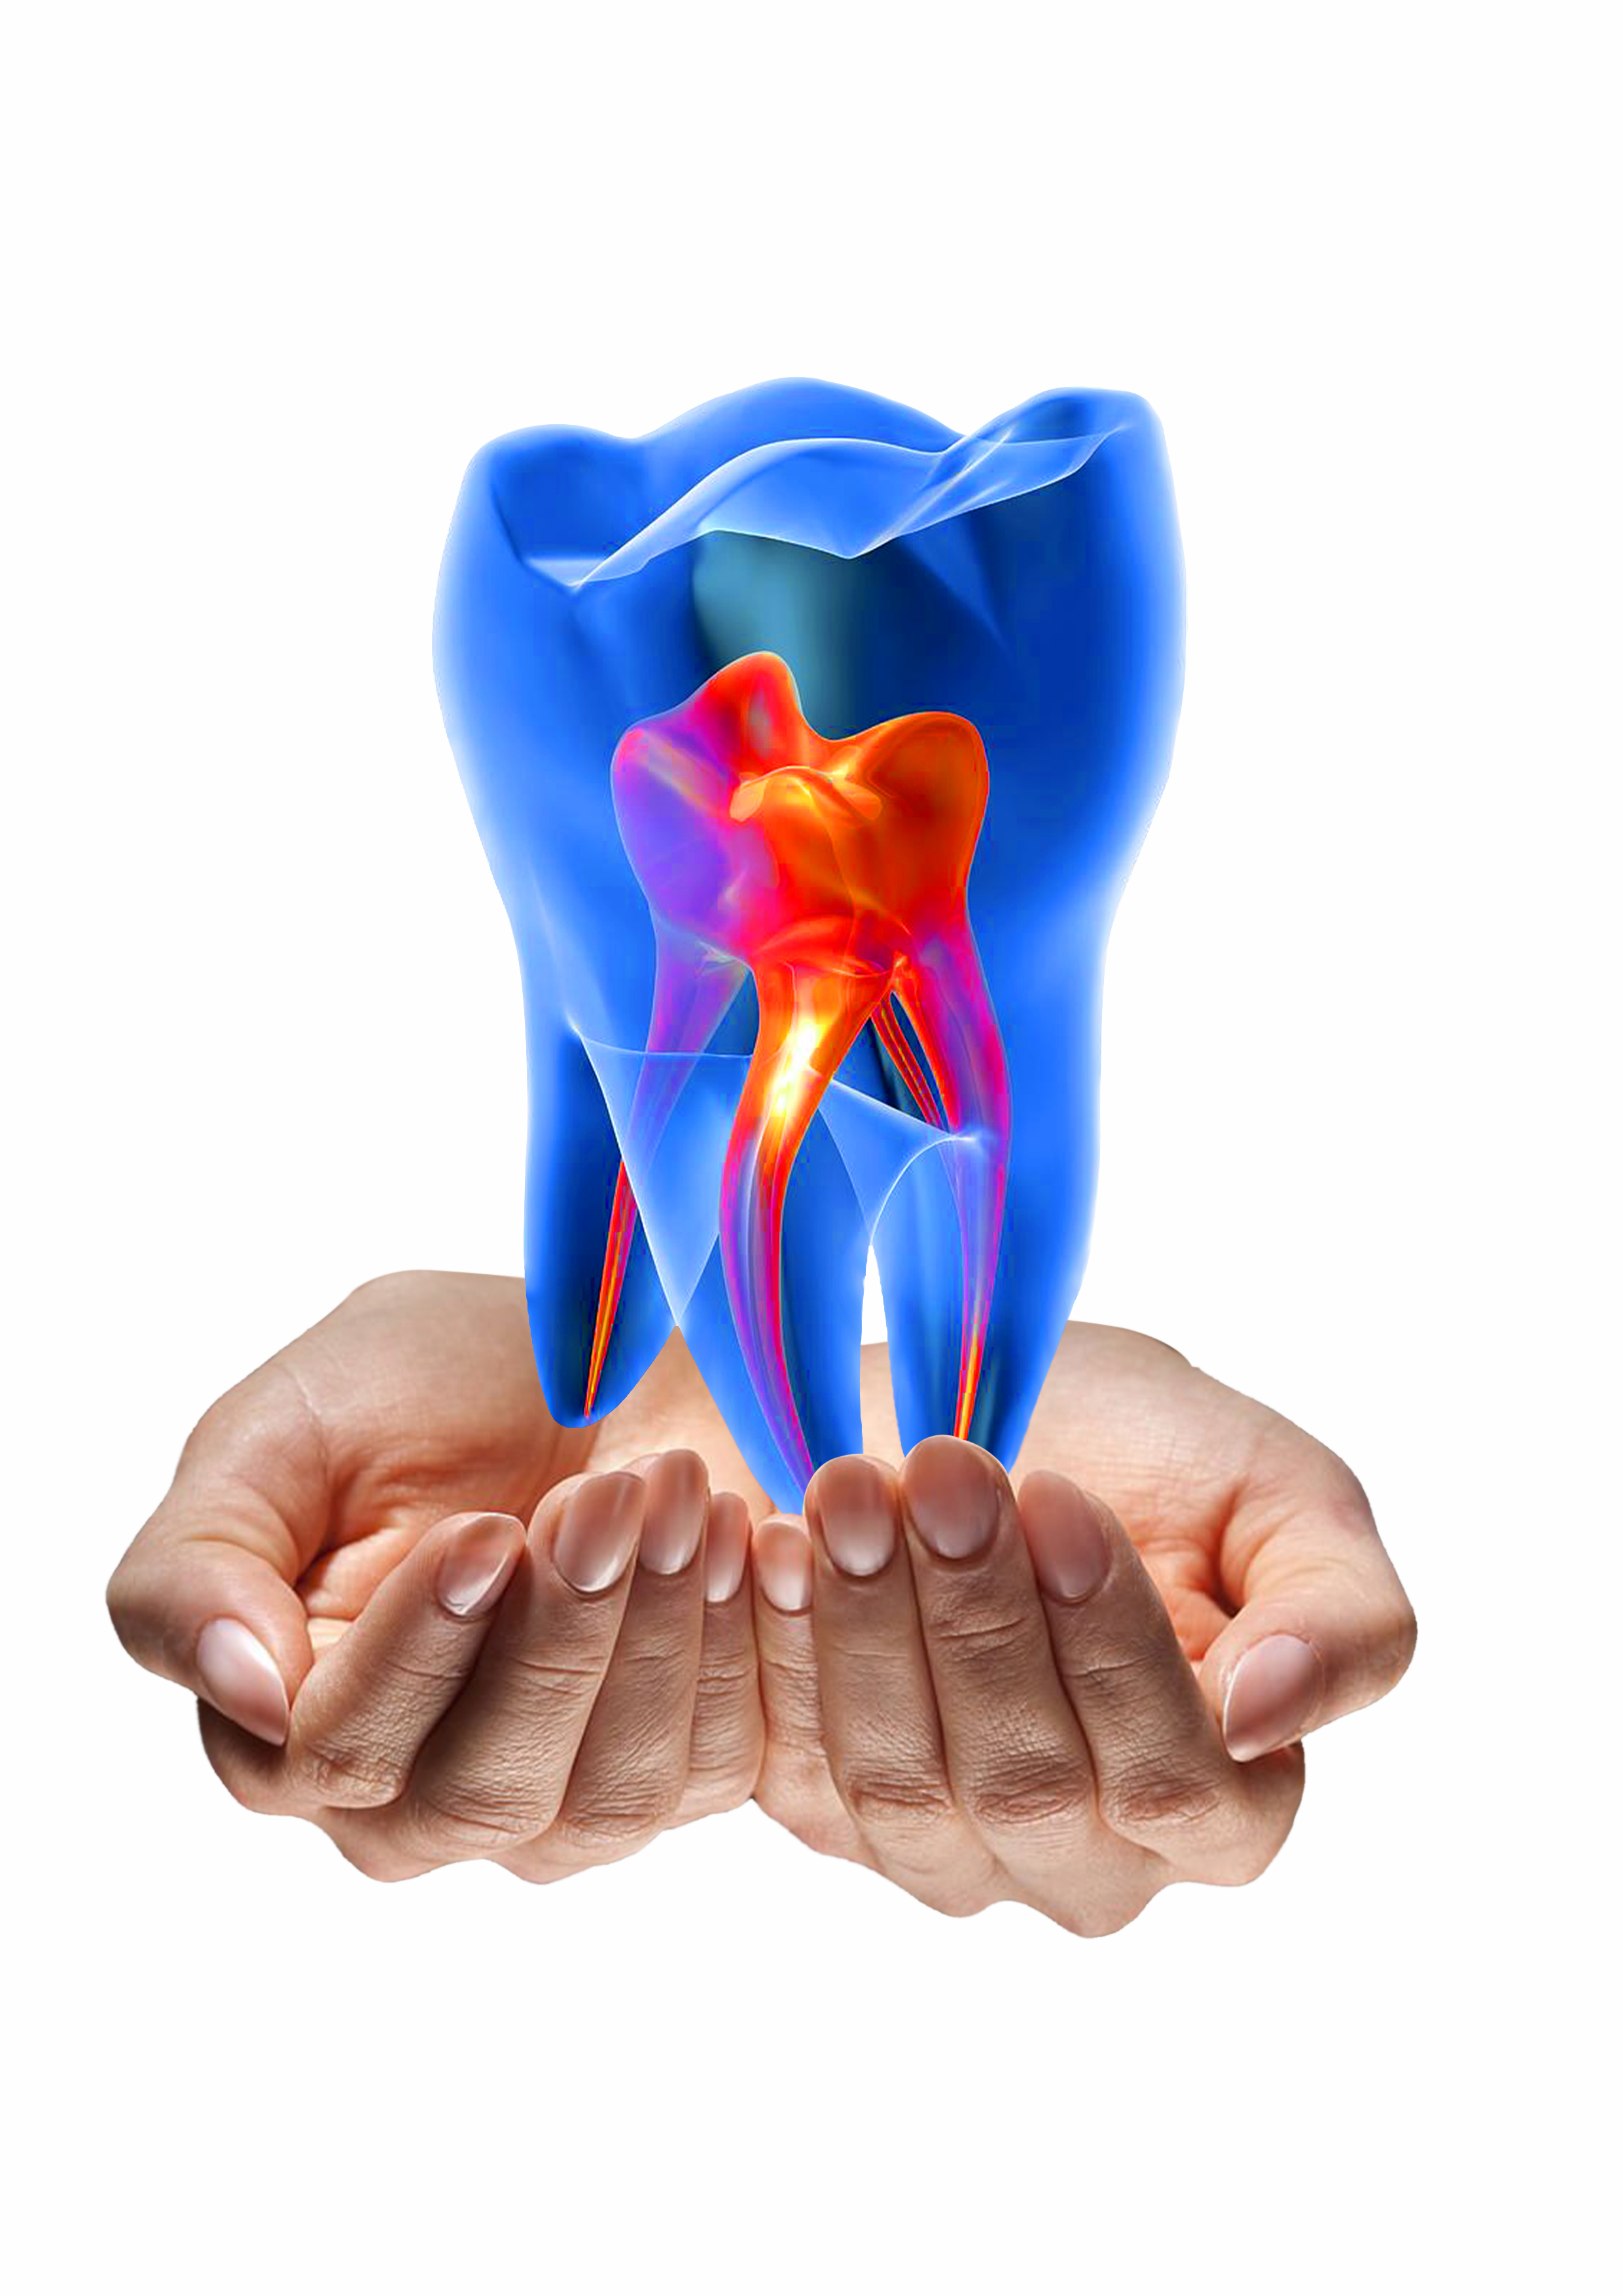 InArt Dental Studio|Dentists|Medical Services